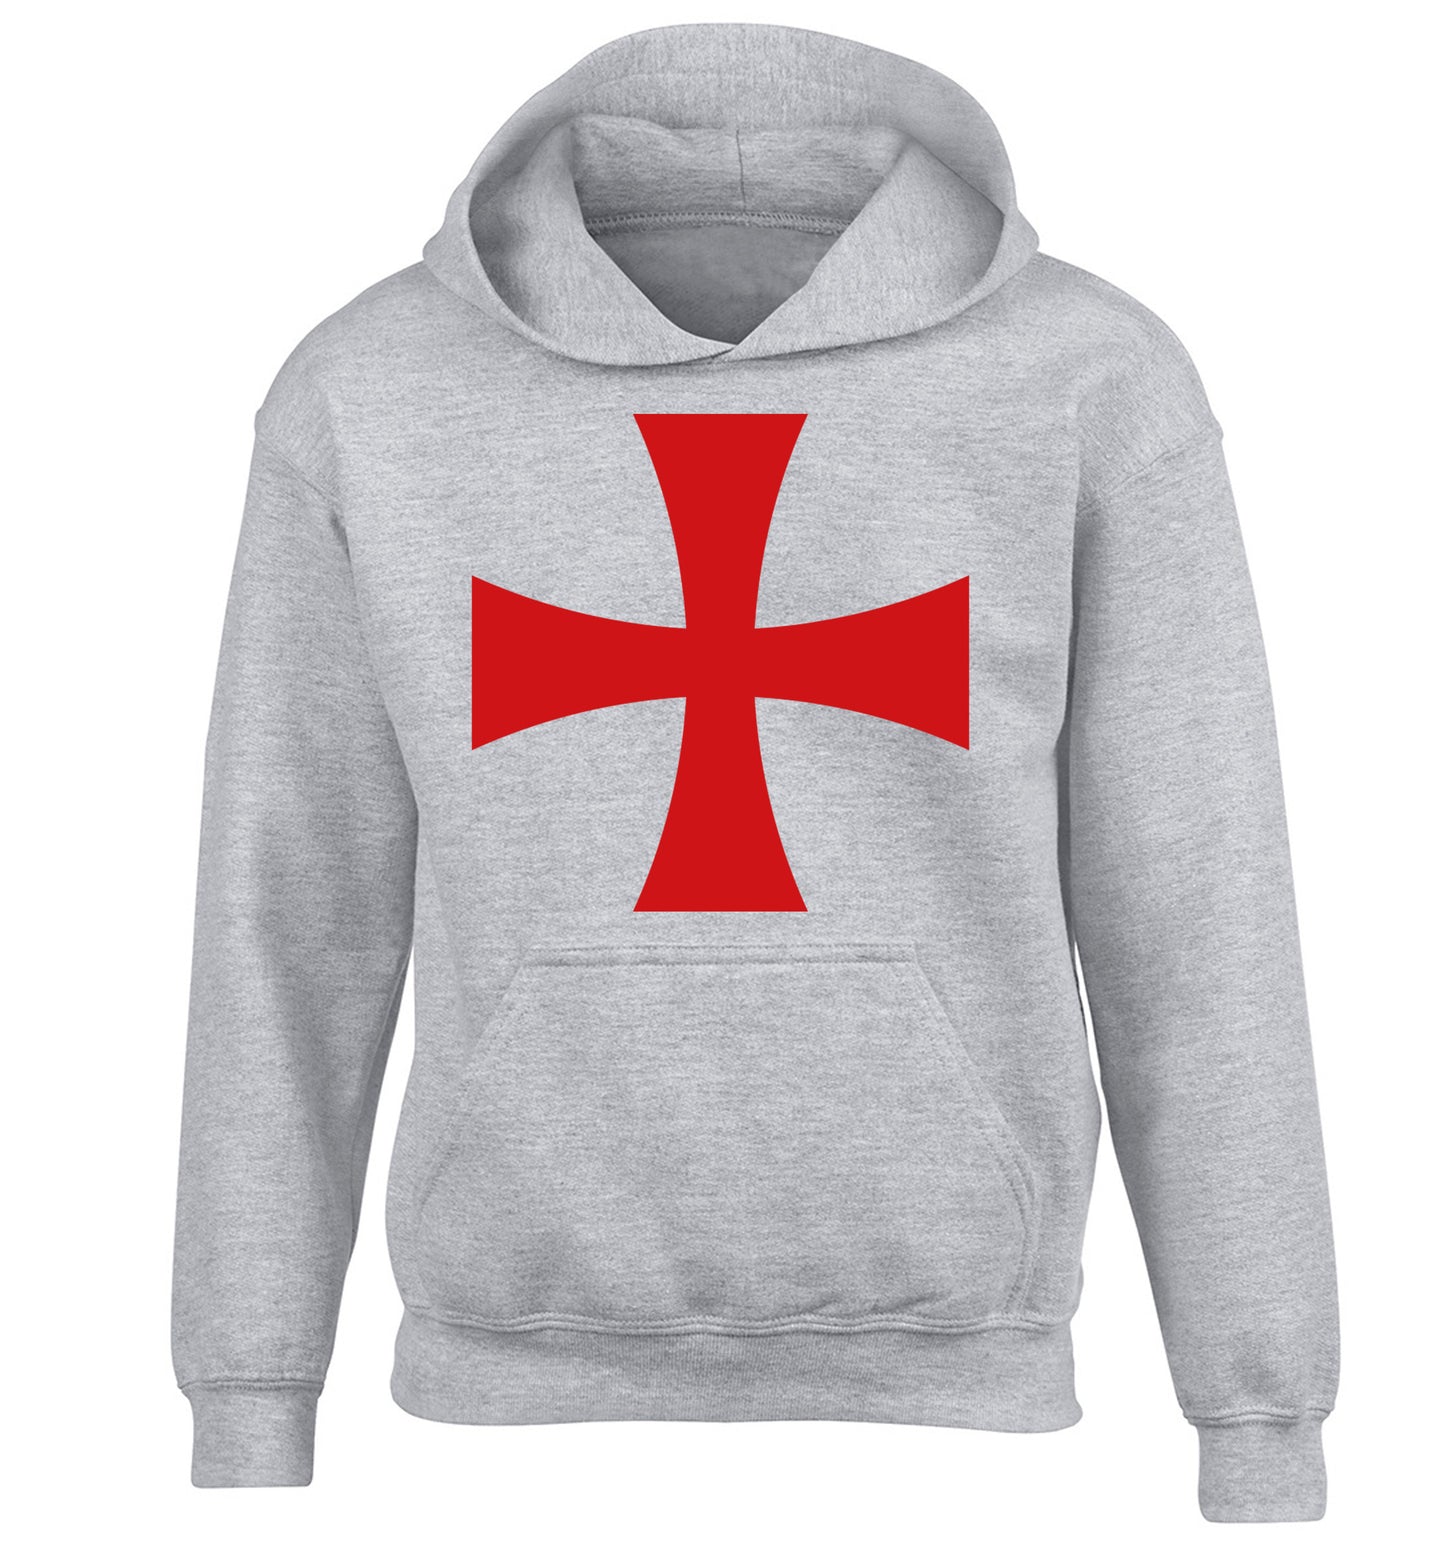 Knights Templar cross children's grey hoodie 12-14 Years